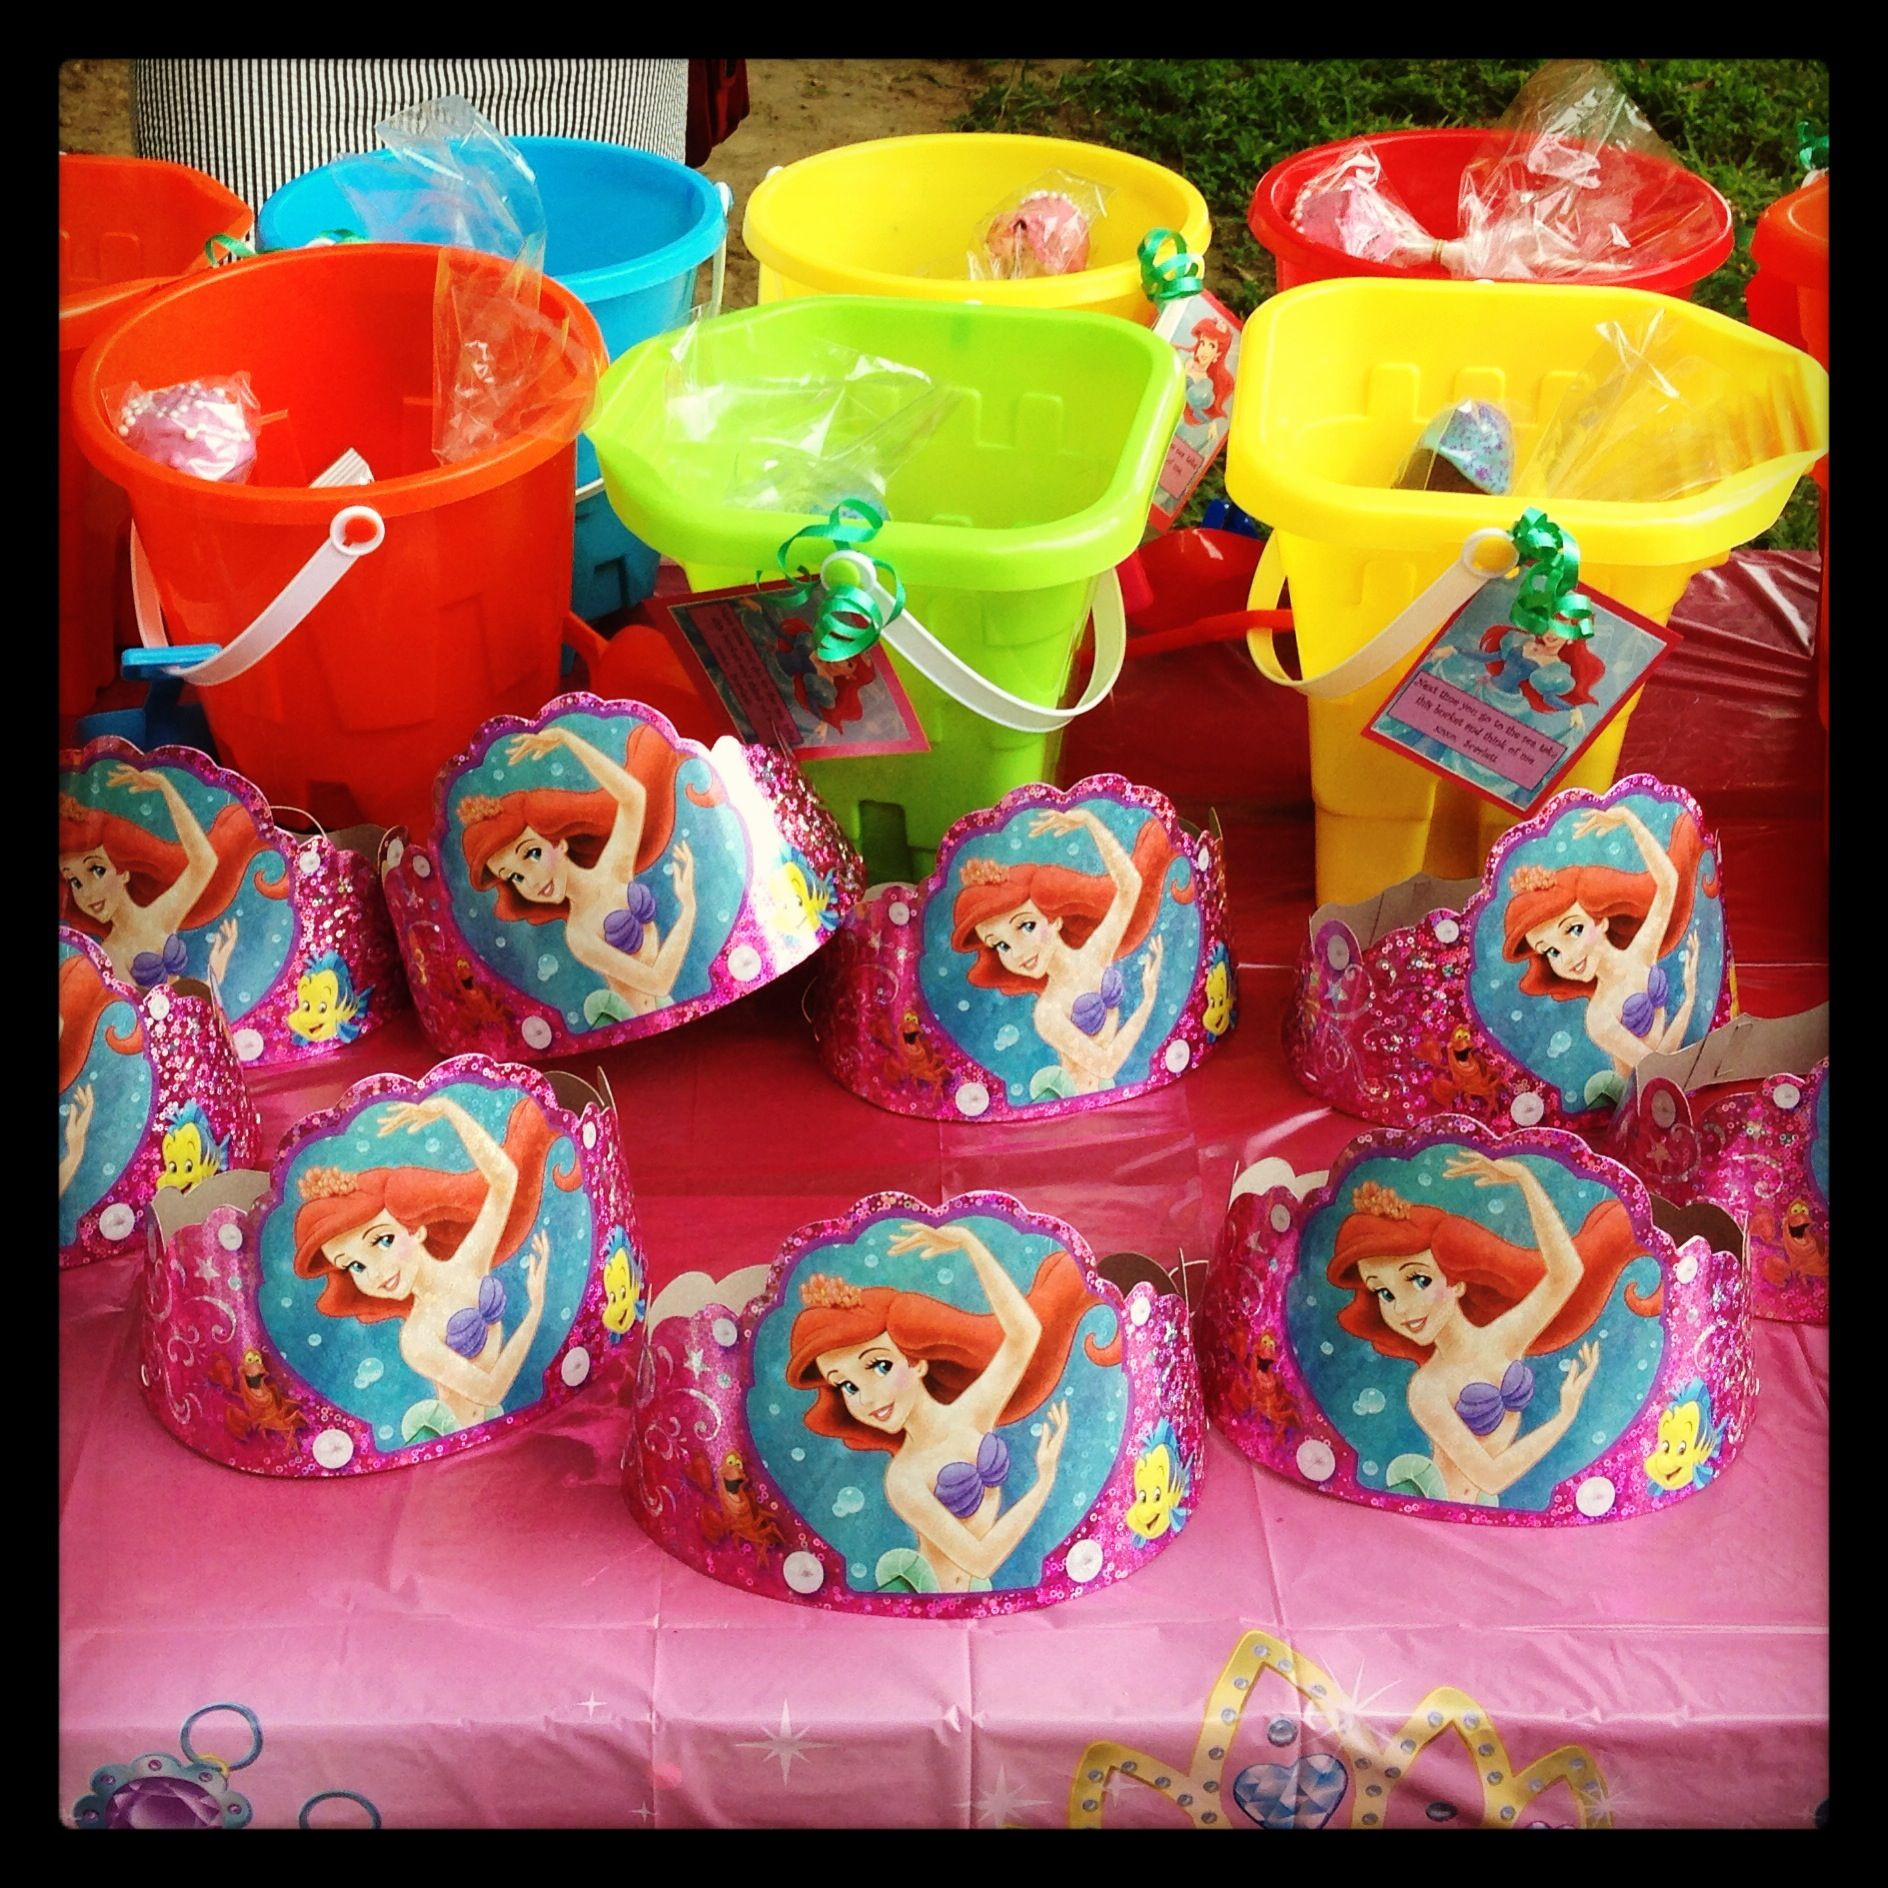 Ariel Little Mermaid Birthday Party Ideas
 Ariel party favors